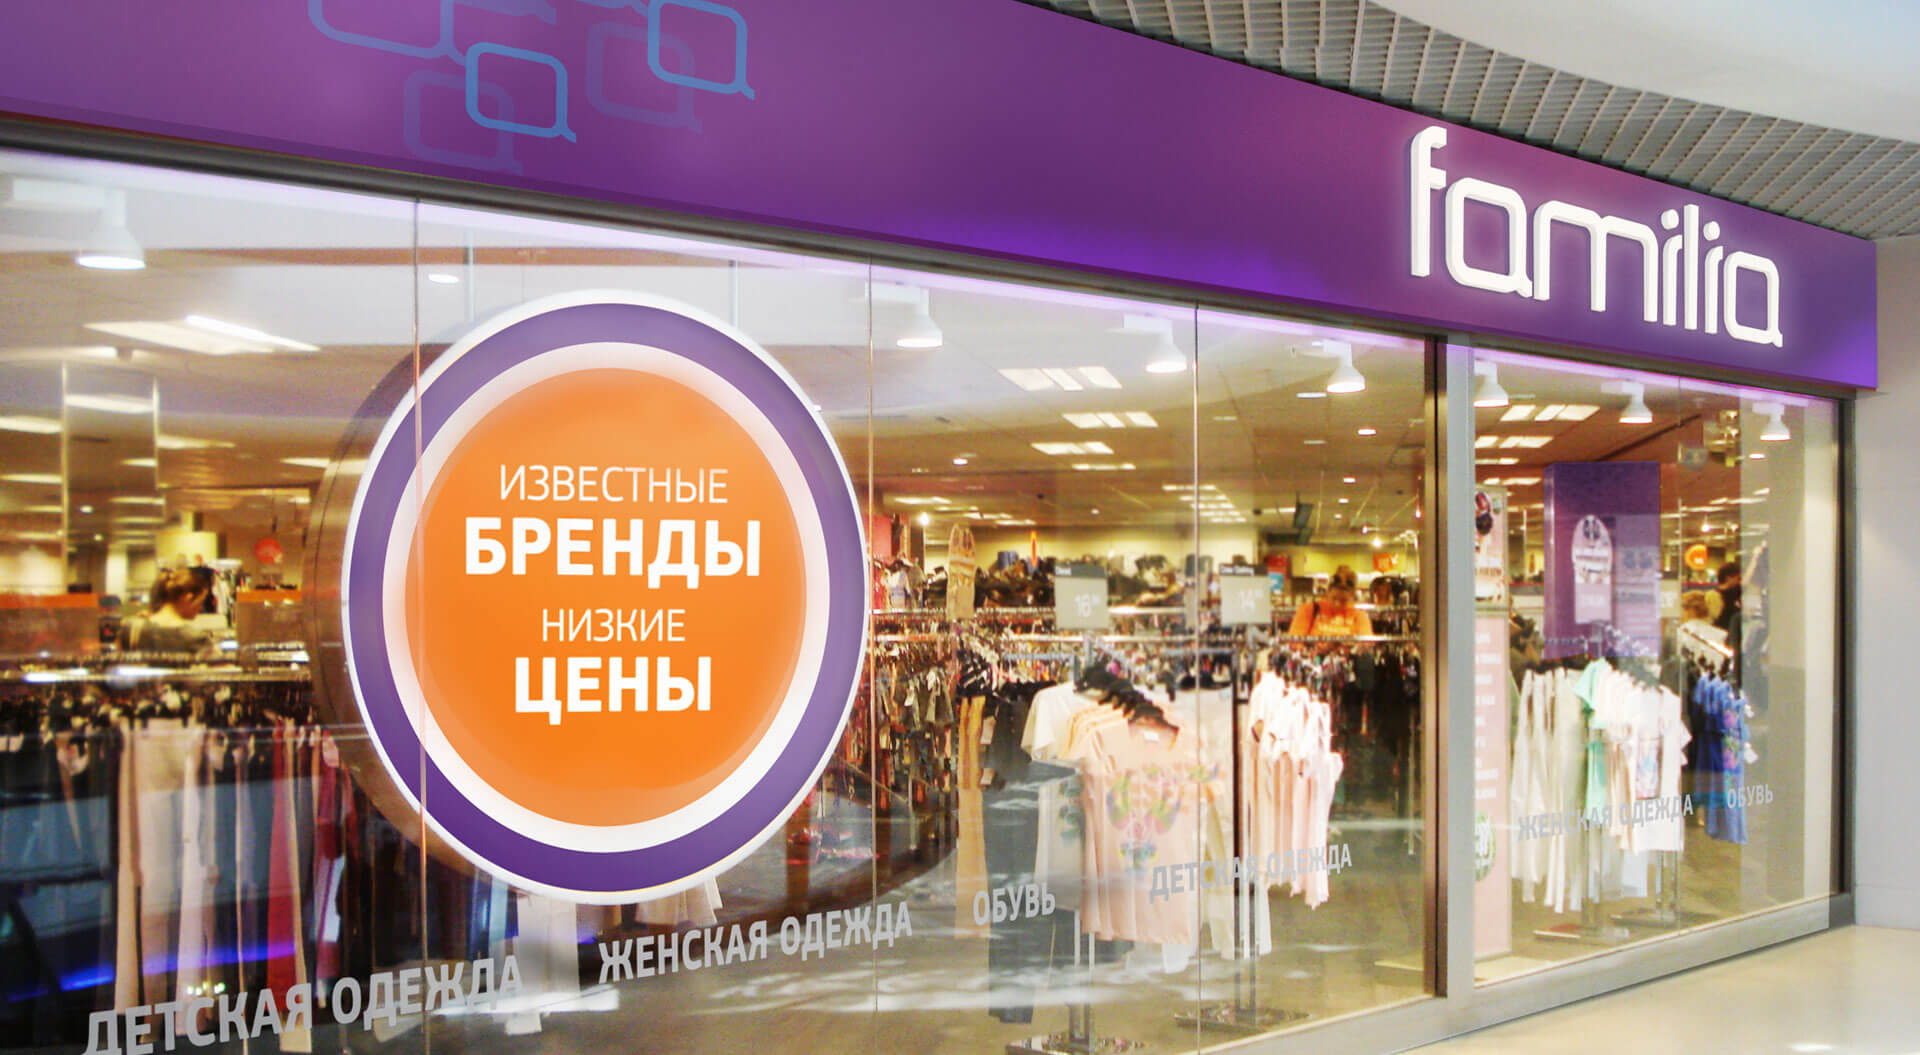 Familia fashion stores brand identity Russia, store window display